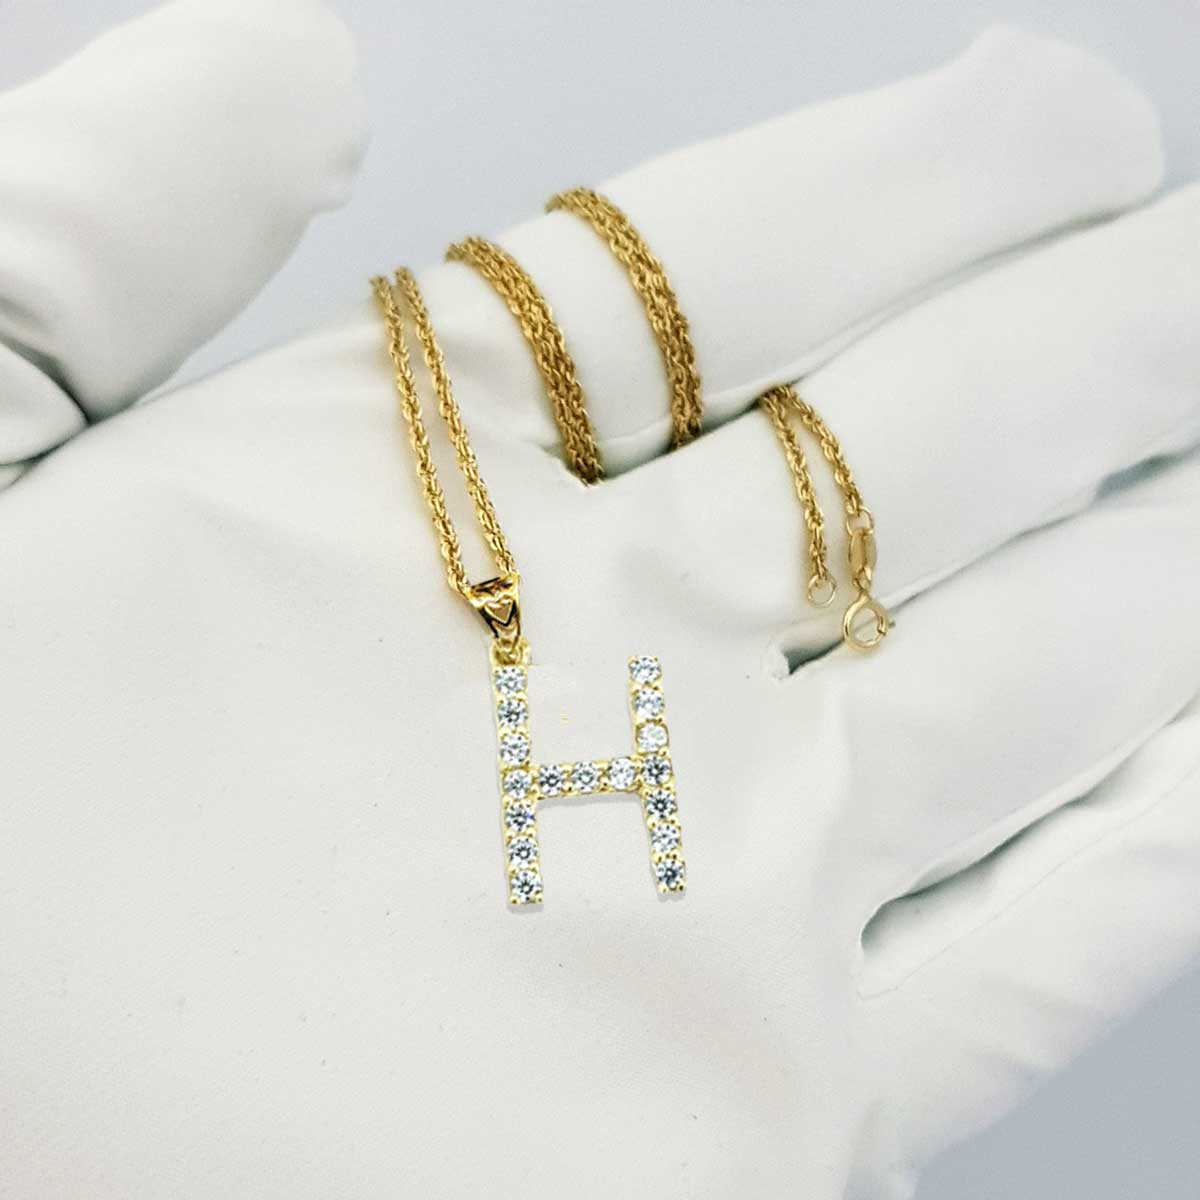 18K Pure Gold Letter H Design w/ Zircon Stone Necklace